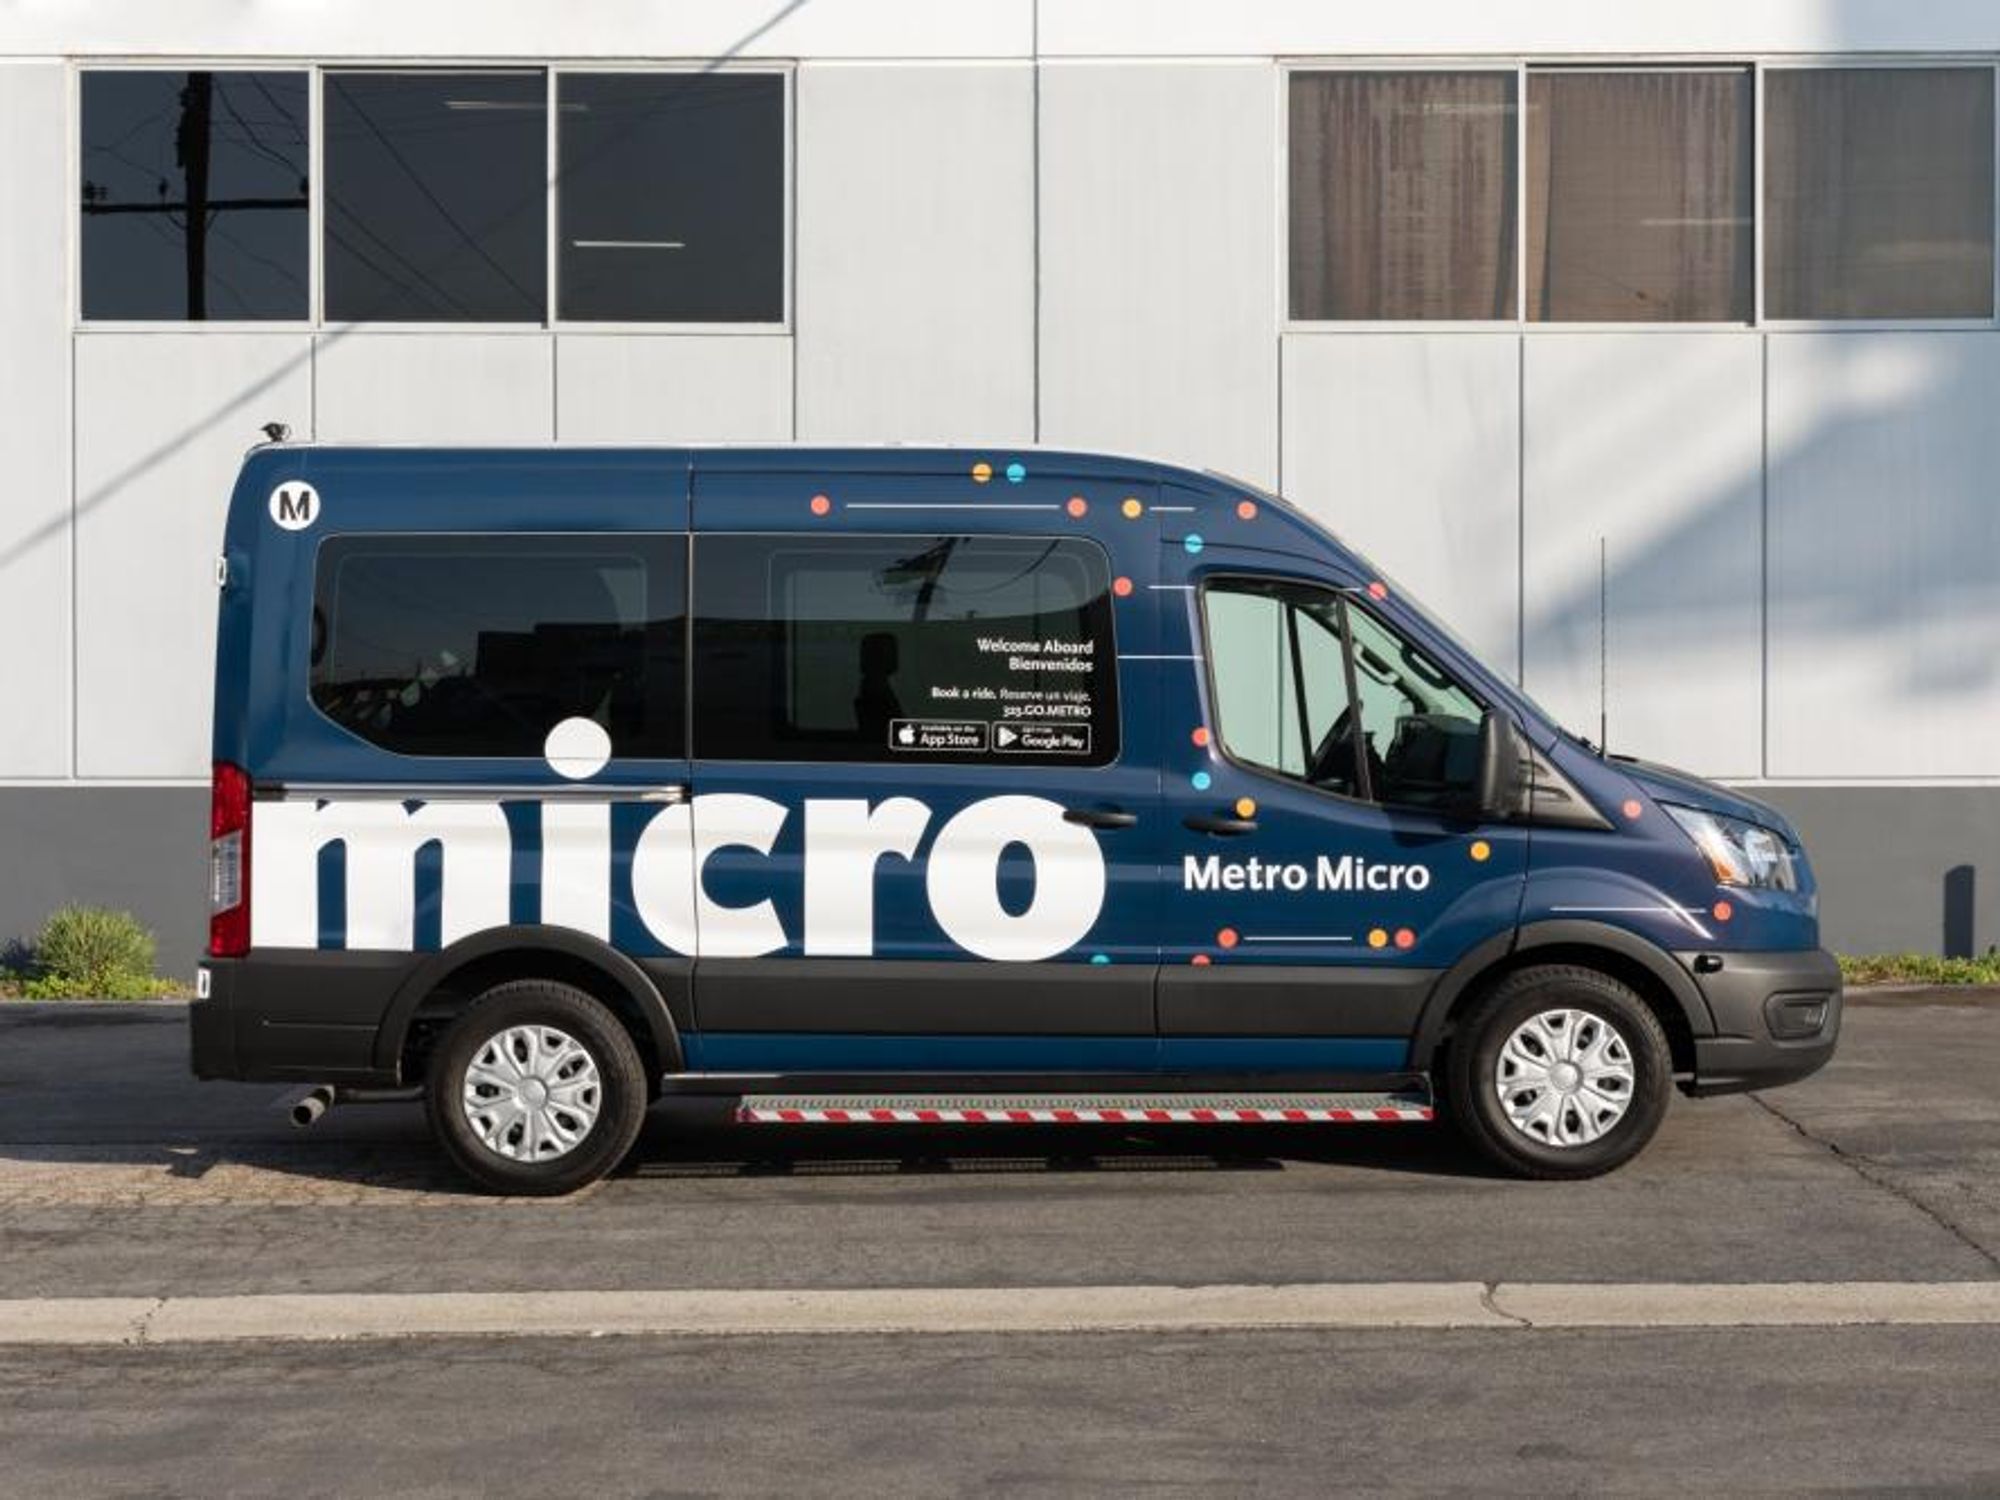 A parked Metro Micro van.